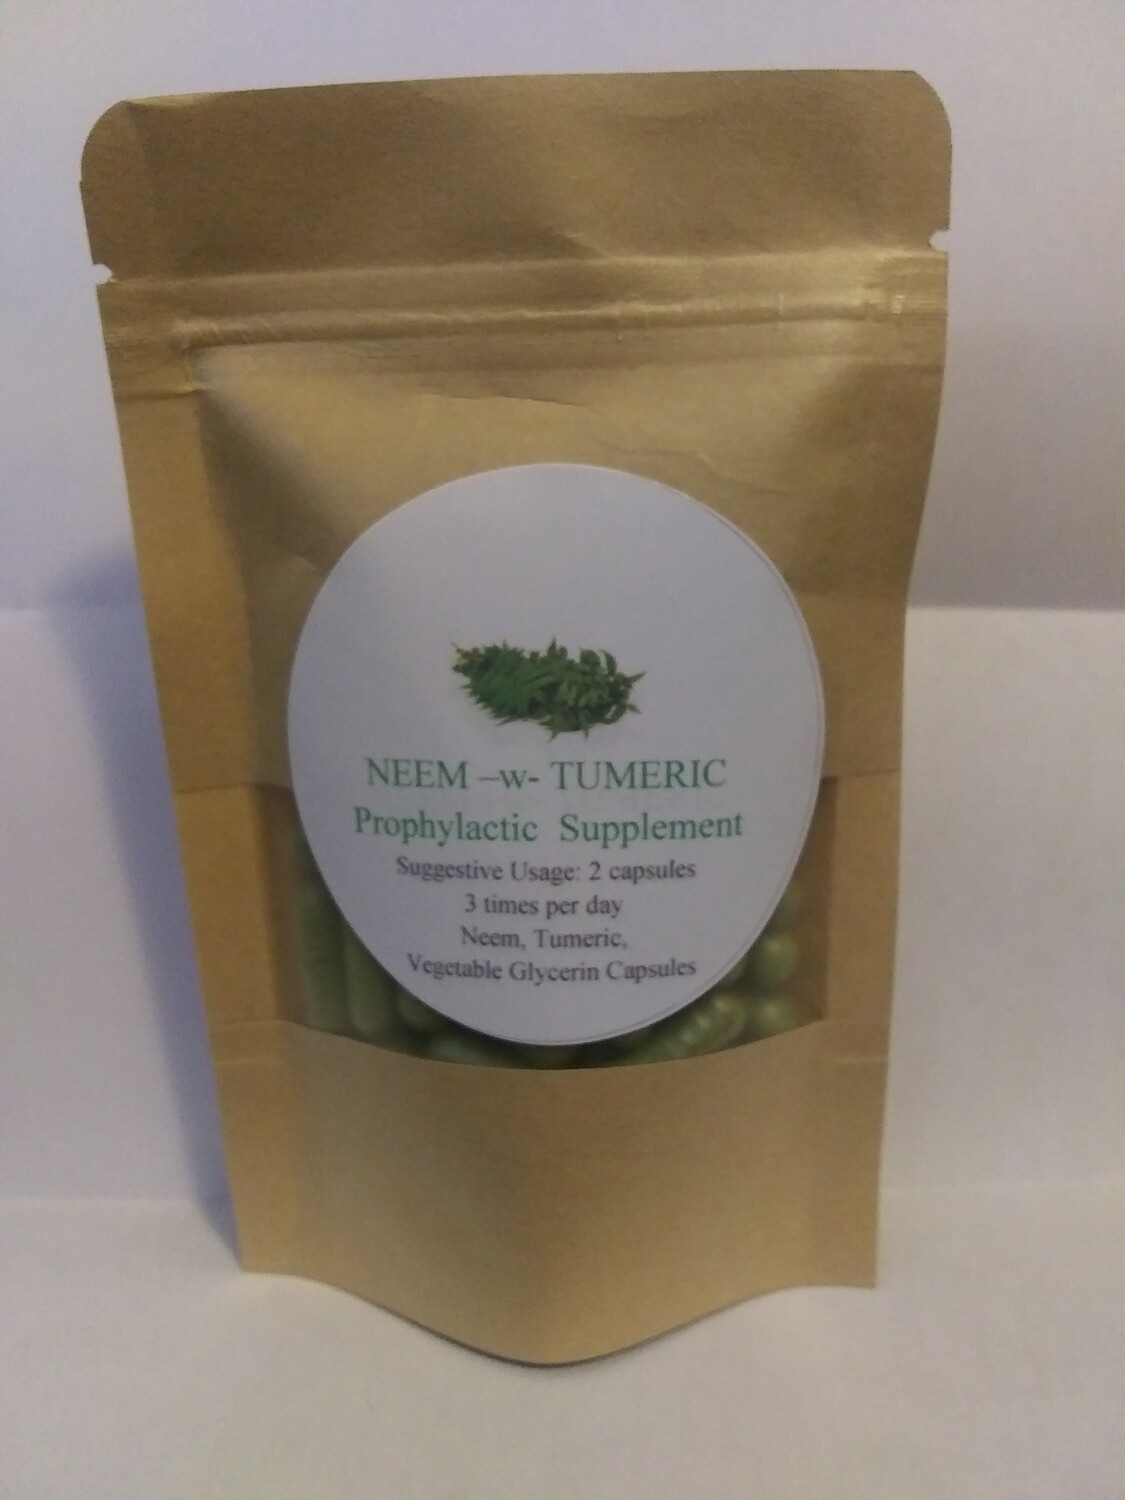 NEEM -w- TUMERIC Supplement